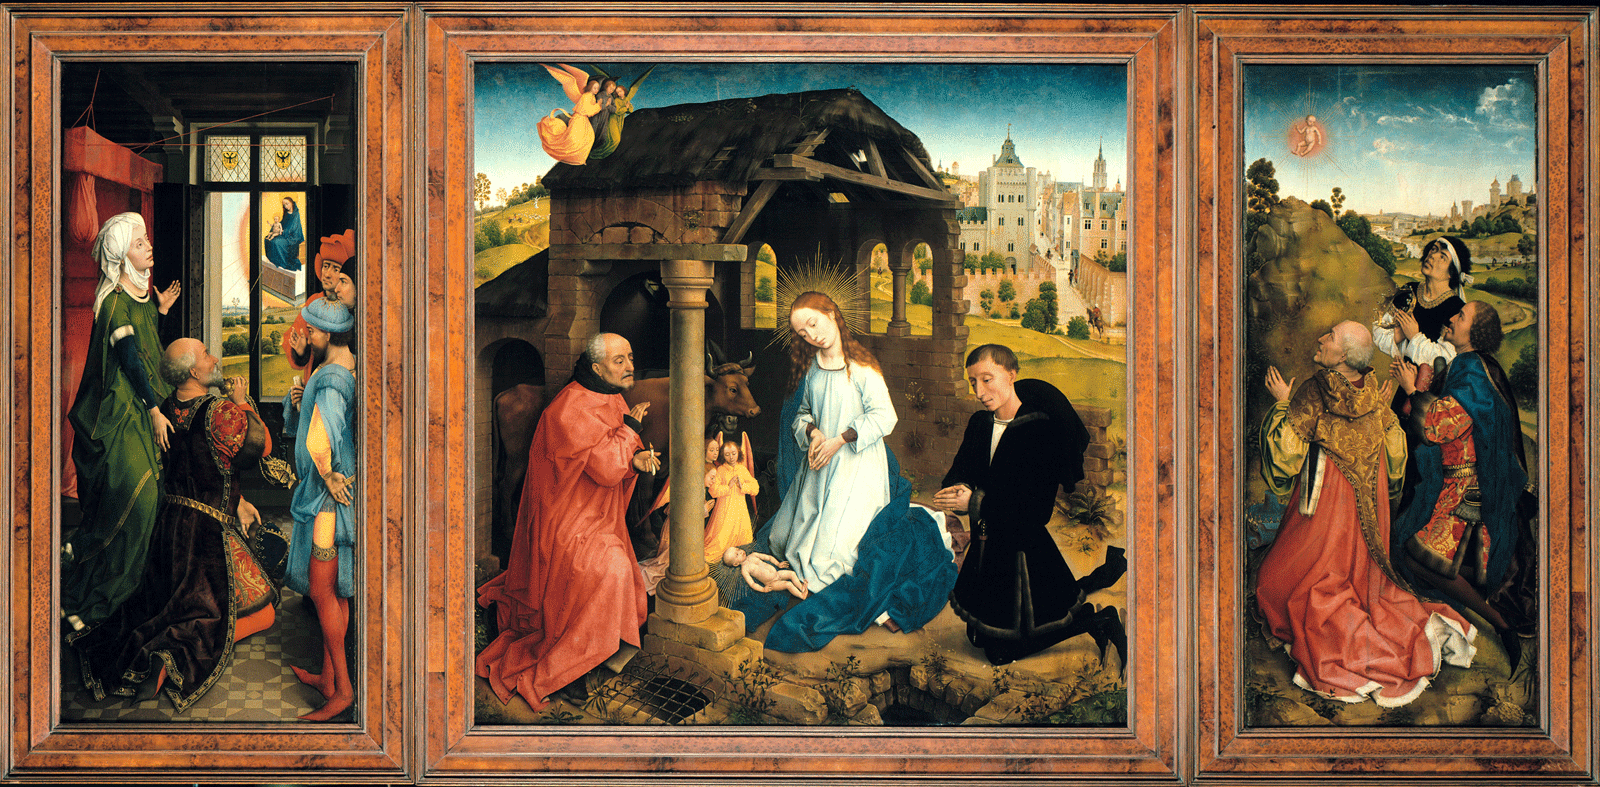 Nativity Altarpiece of Pieter Bladelin by Rogier van der Weyden - 1445-50 - 91 x 89 cm Gemäldegalerie